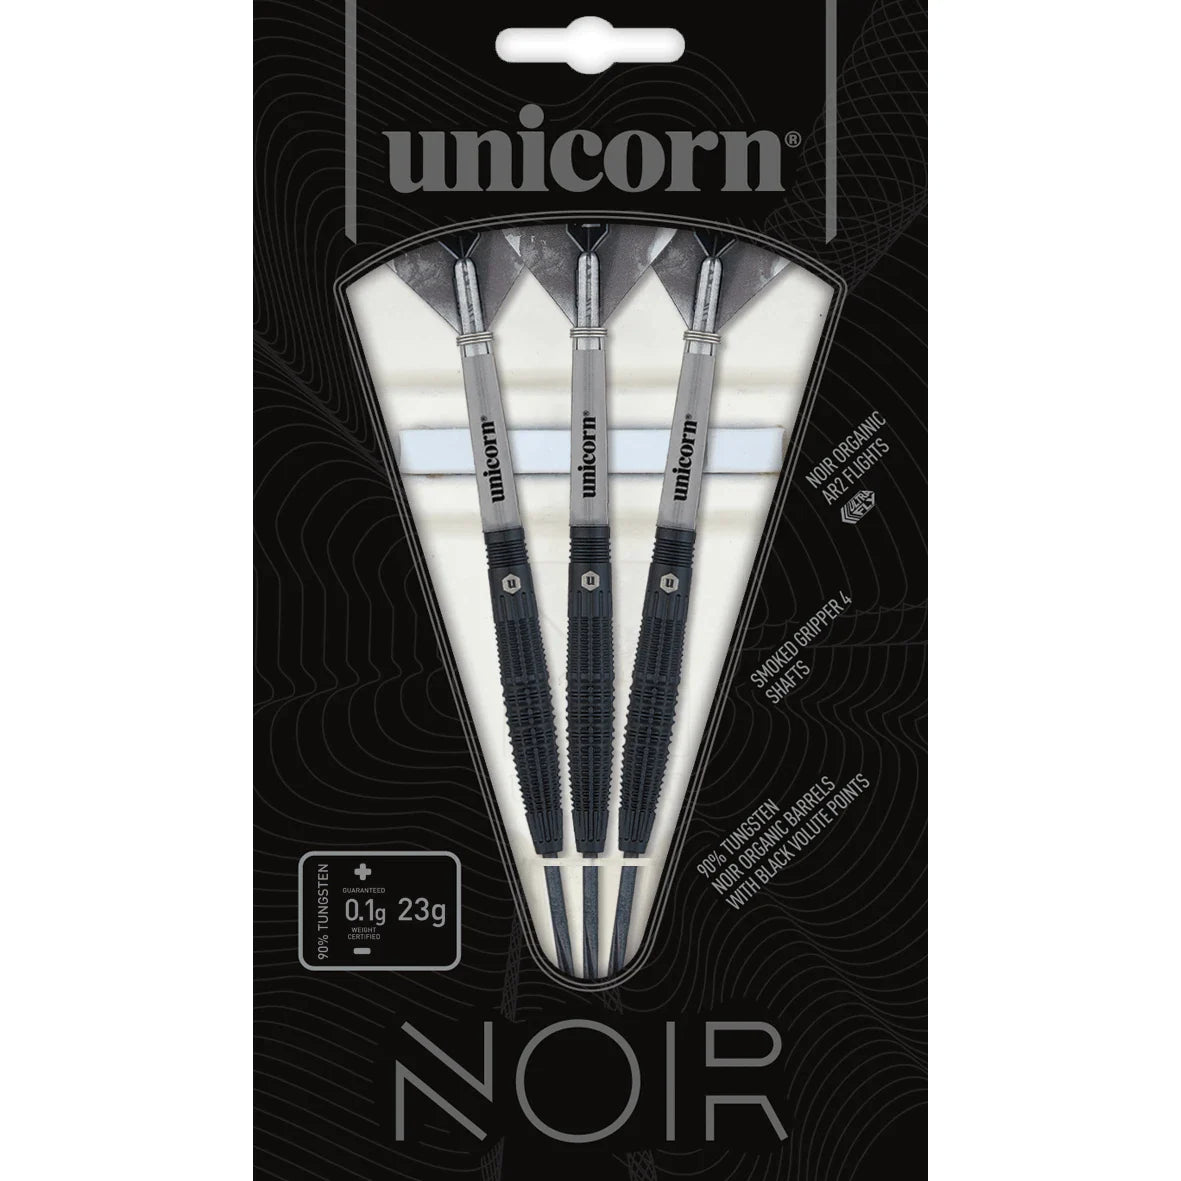 Unicorn Noir Style 2 25g Darts